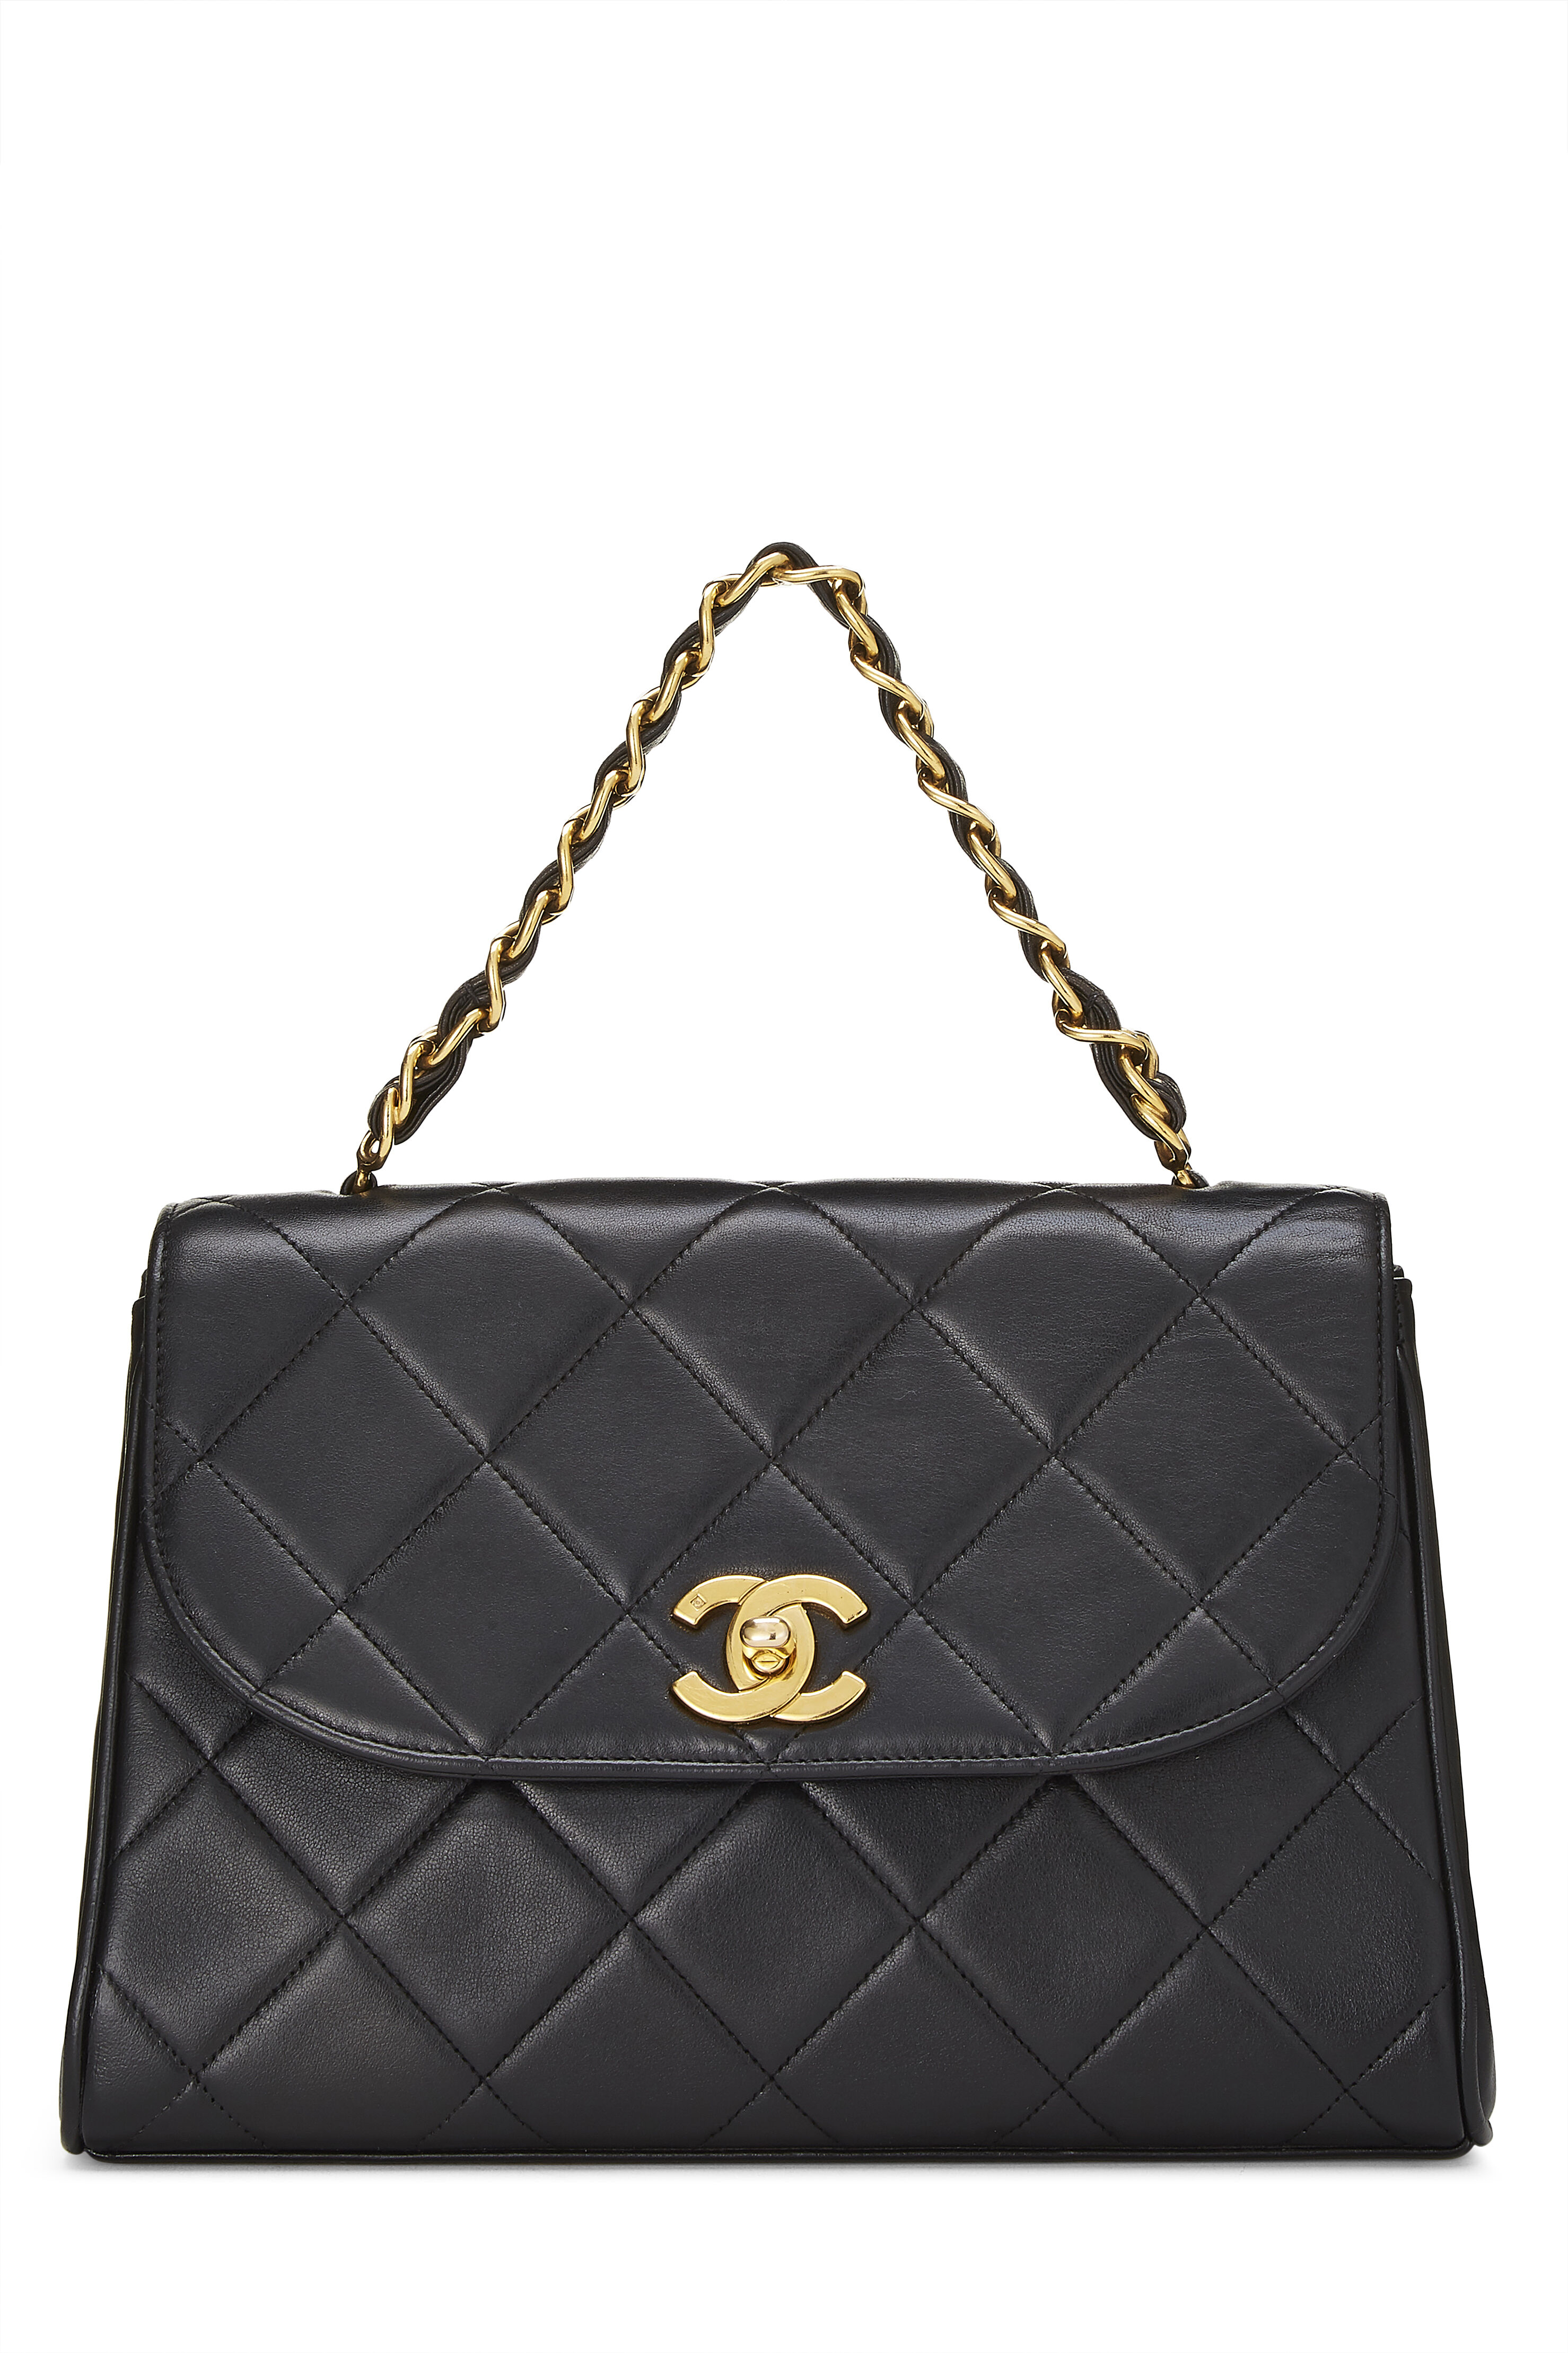 Chanel - Black Quilted Lambskin Handbag